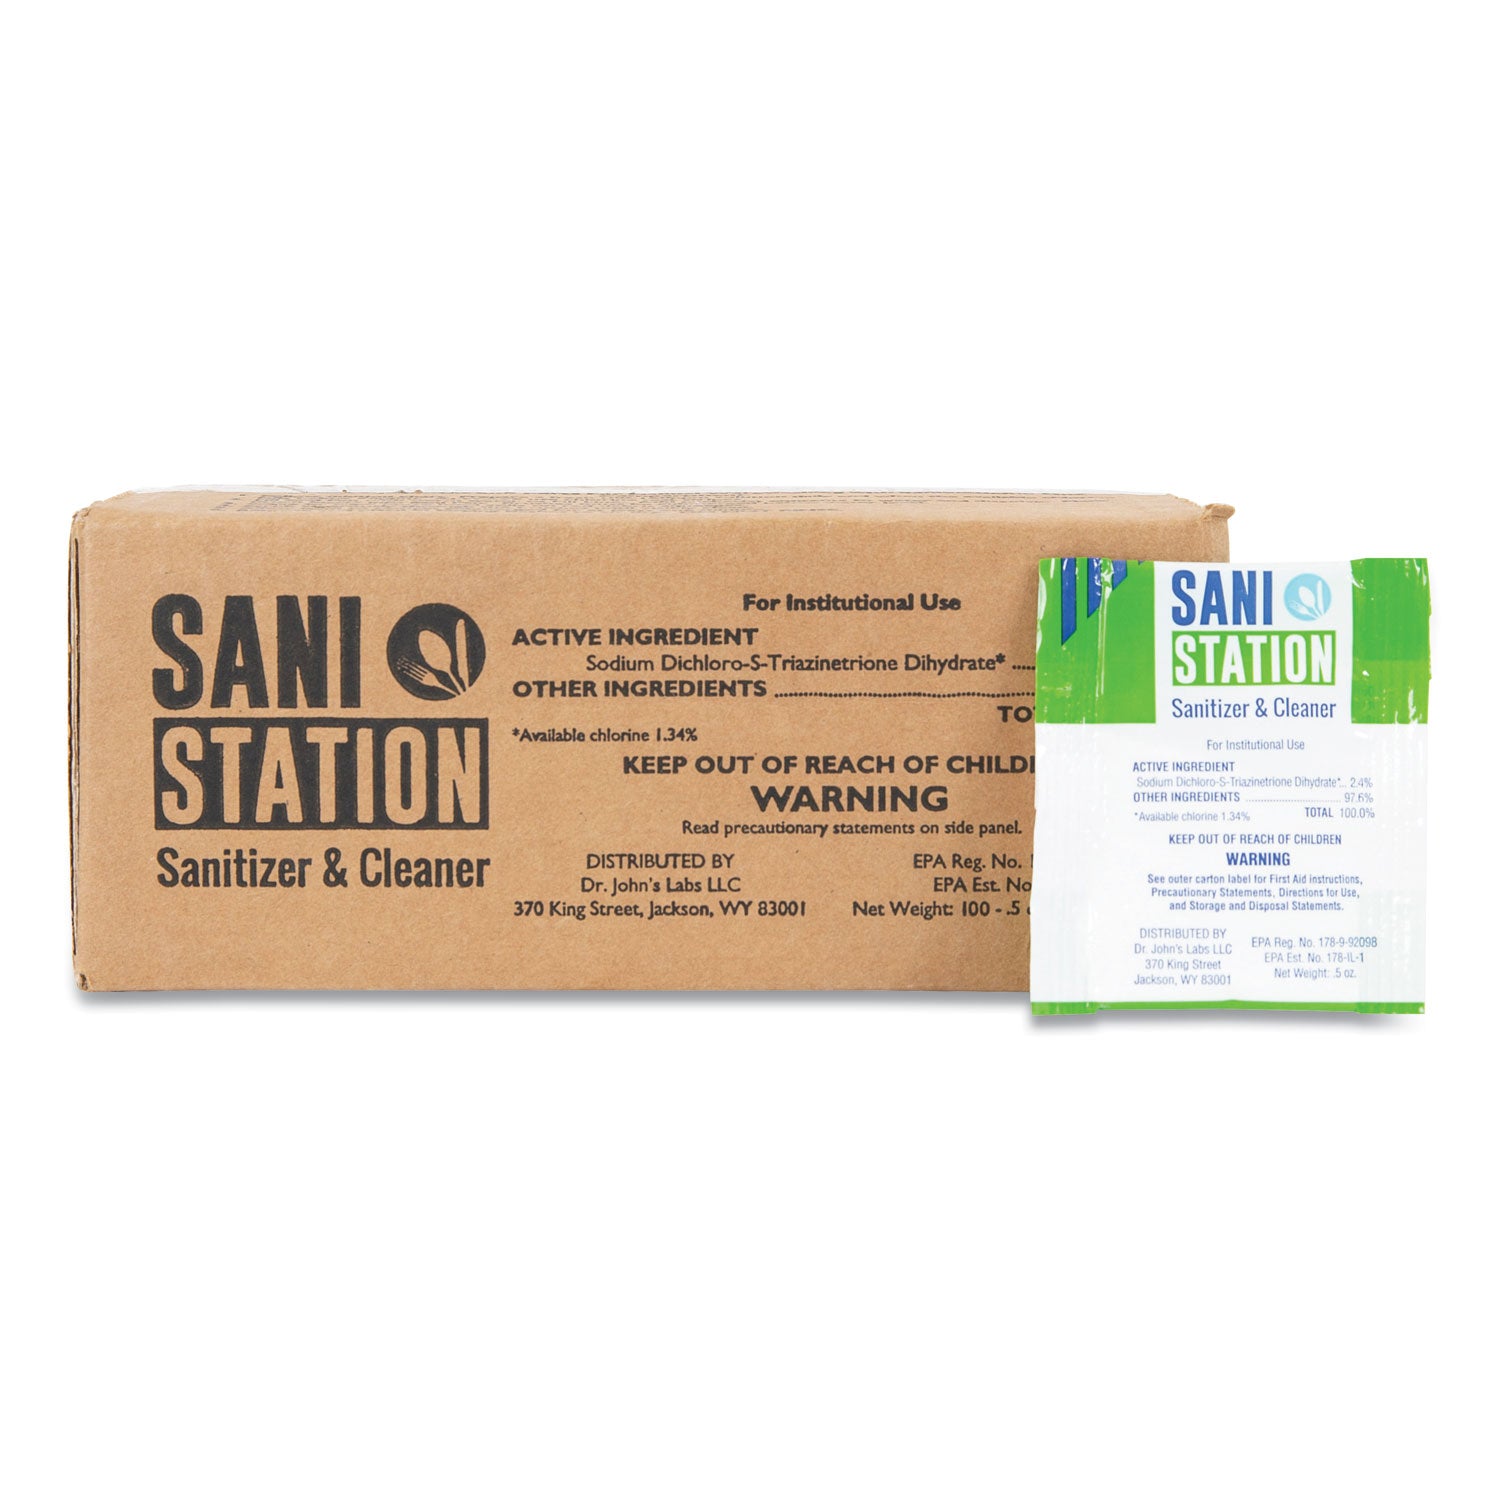 sani-station-sanitizer-and-cleaner-05-oz-packets-100-pack_sjmsanis05100 - 1